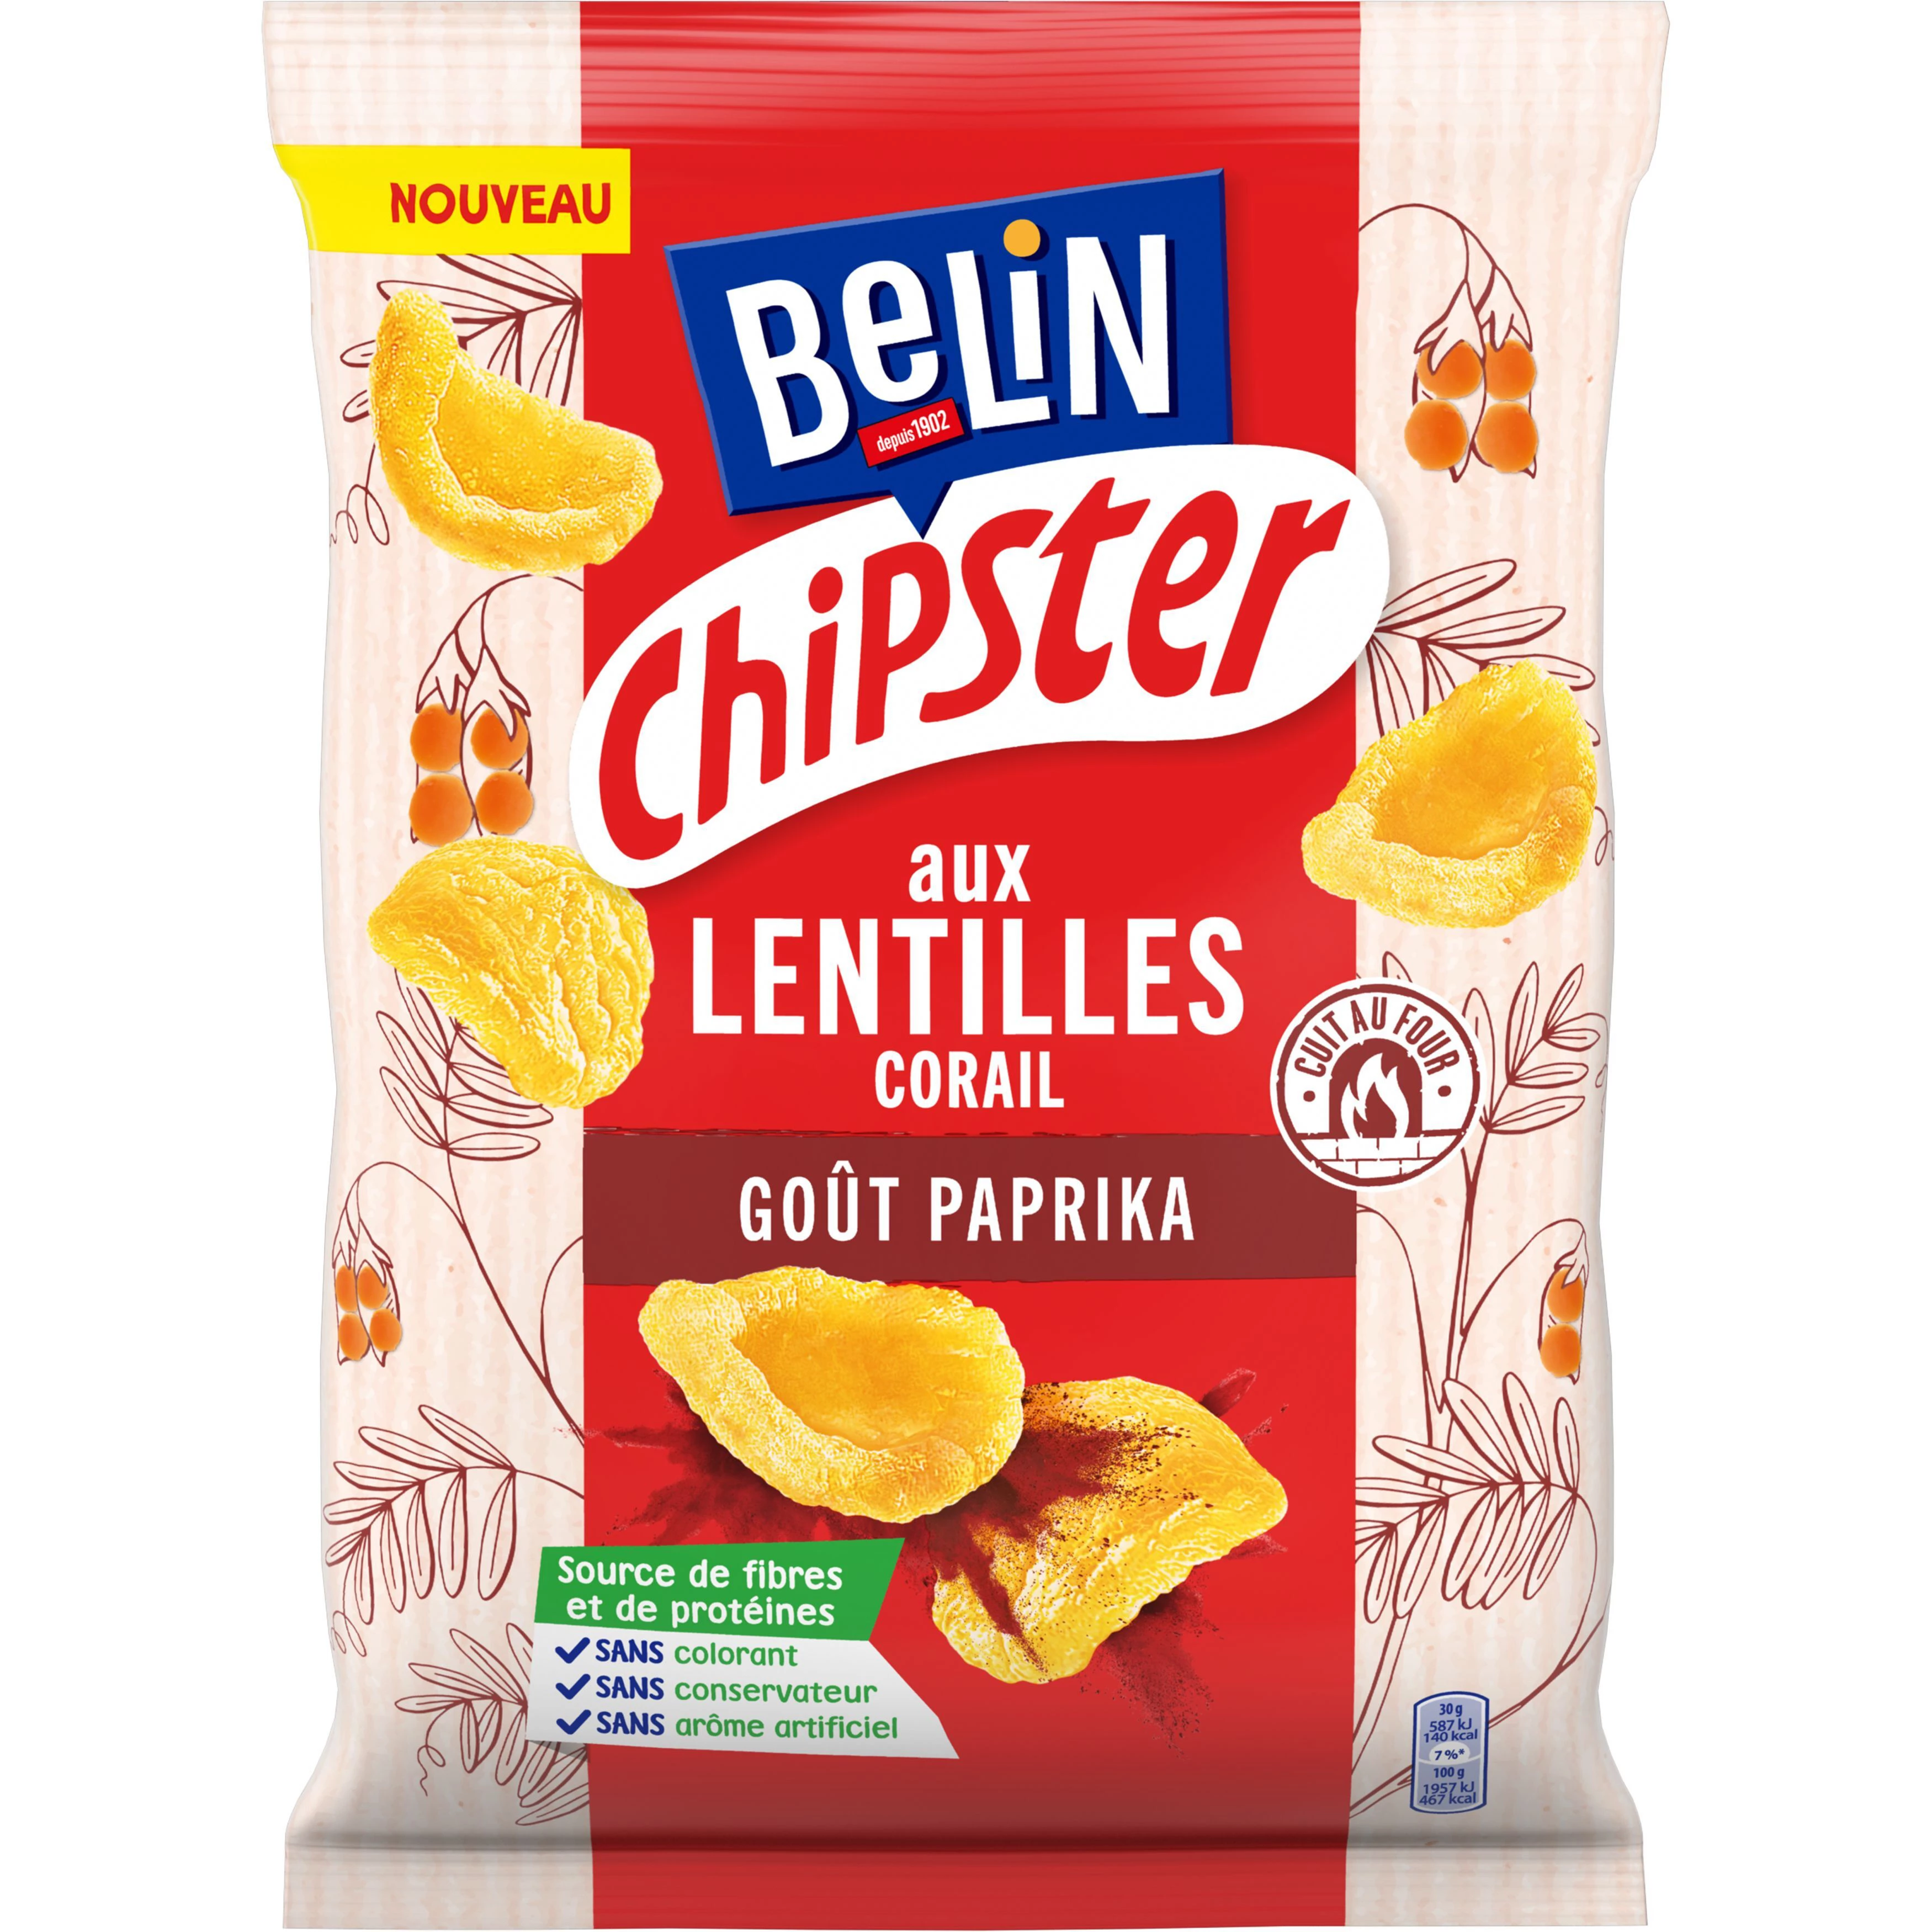 CorAil Lentil Aperitif Biscuits Paprika Chipster Flavor, 80 g - BELIN